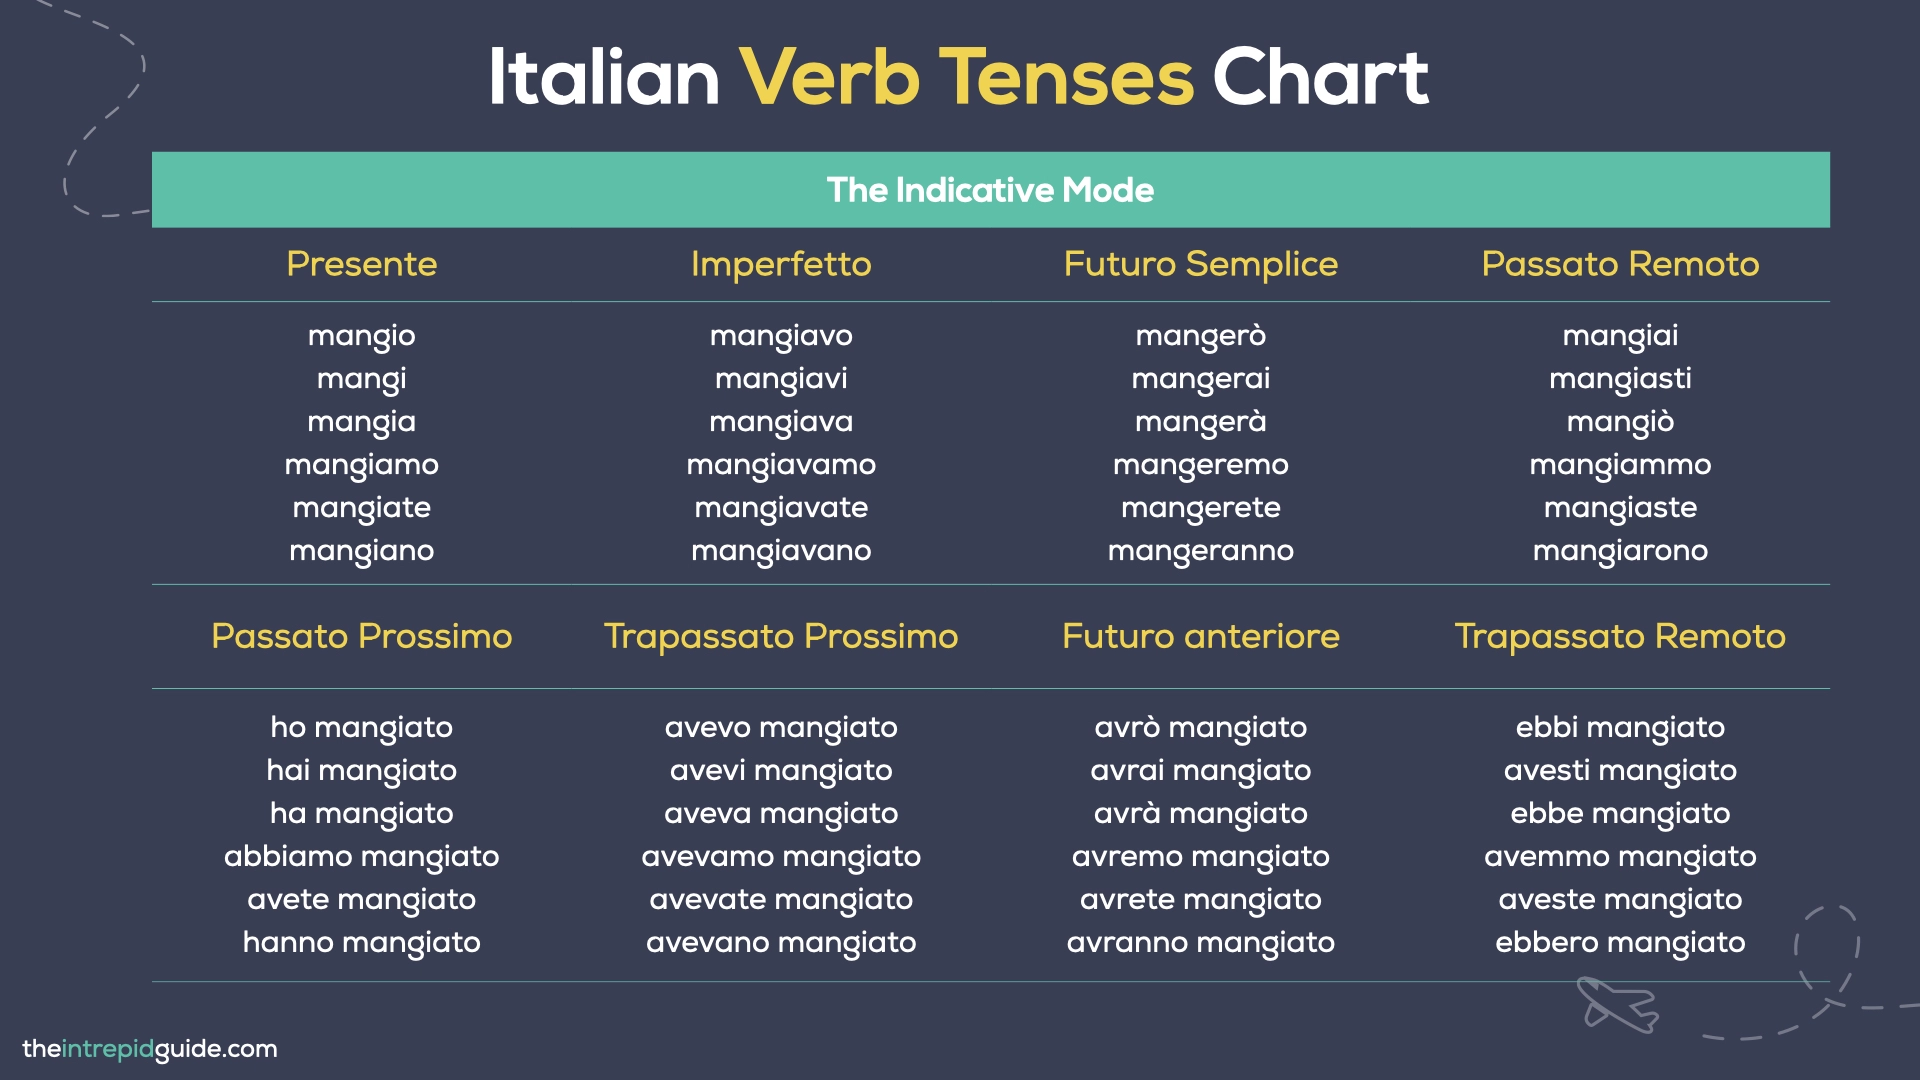 Italian Verb Tenses Chart - Indicative Mode